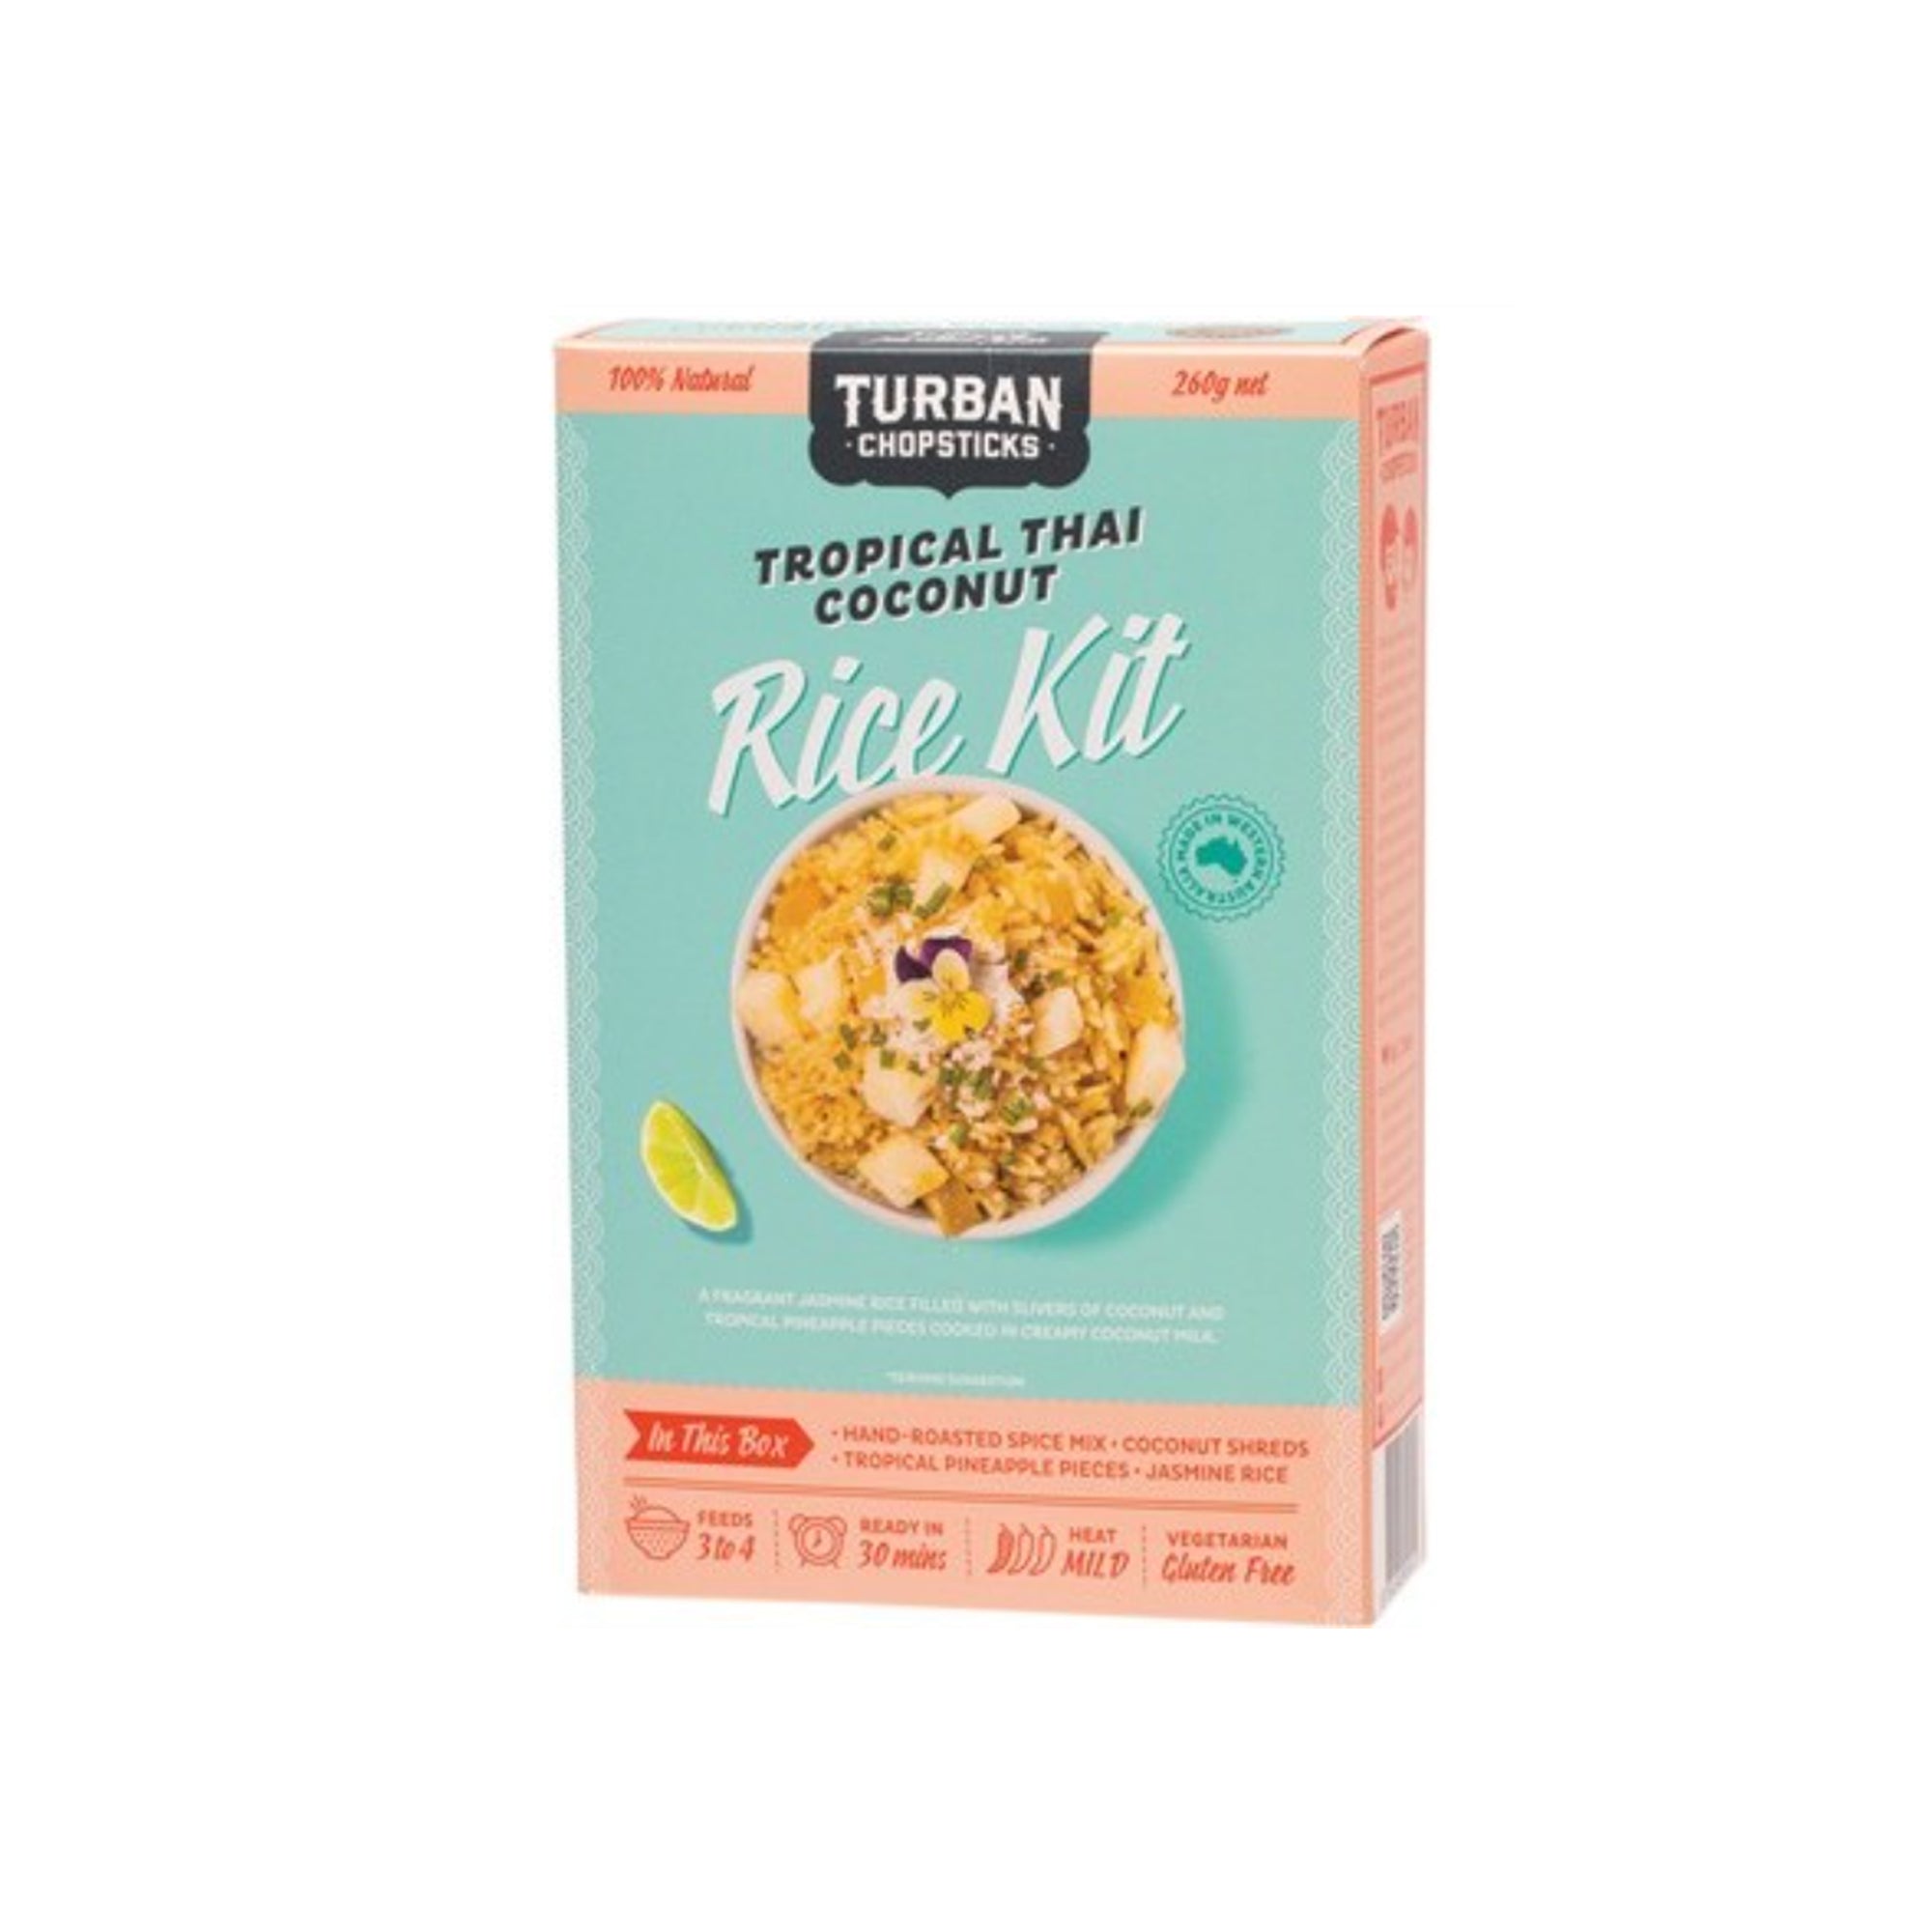 Turban Chopsticks - Rice Kit - Tropical Thai 260g